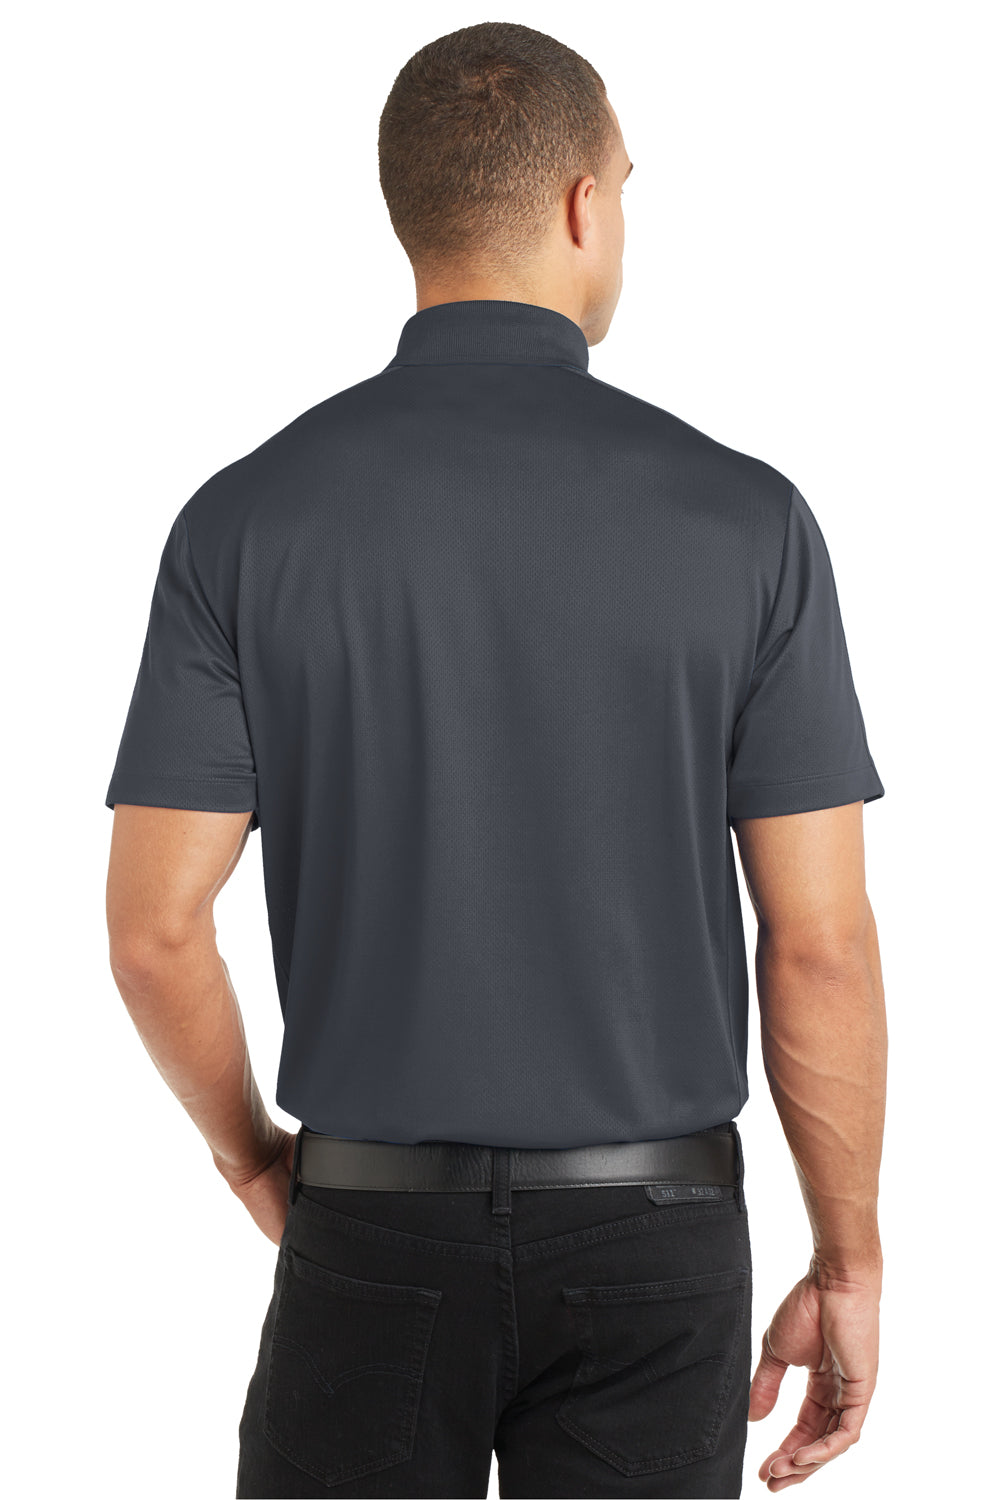 Port Authority K569 Mens Moisture Wicking Short Sleeve Polo Shirt Graphite Grey Back